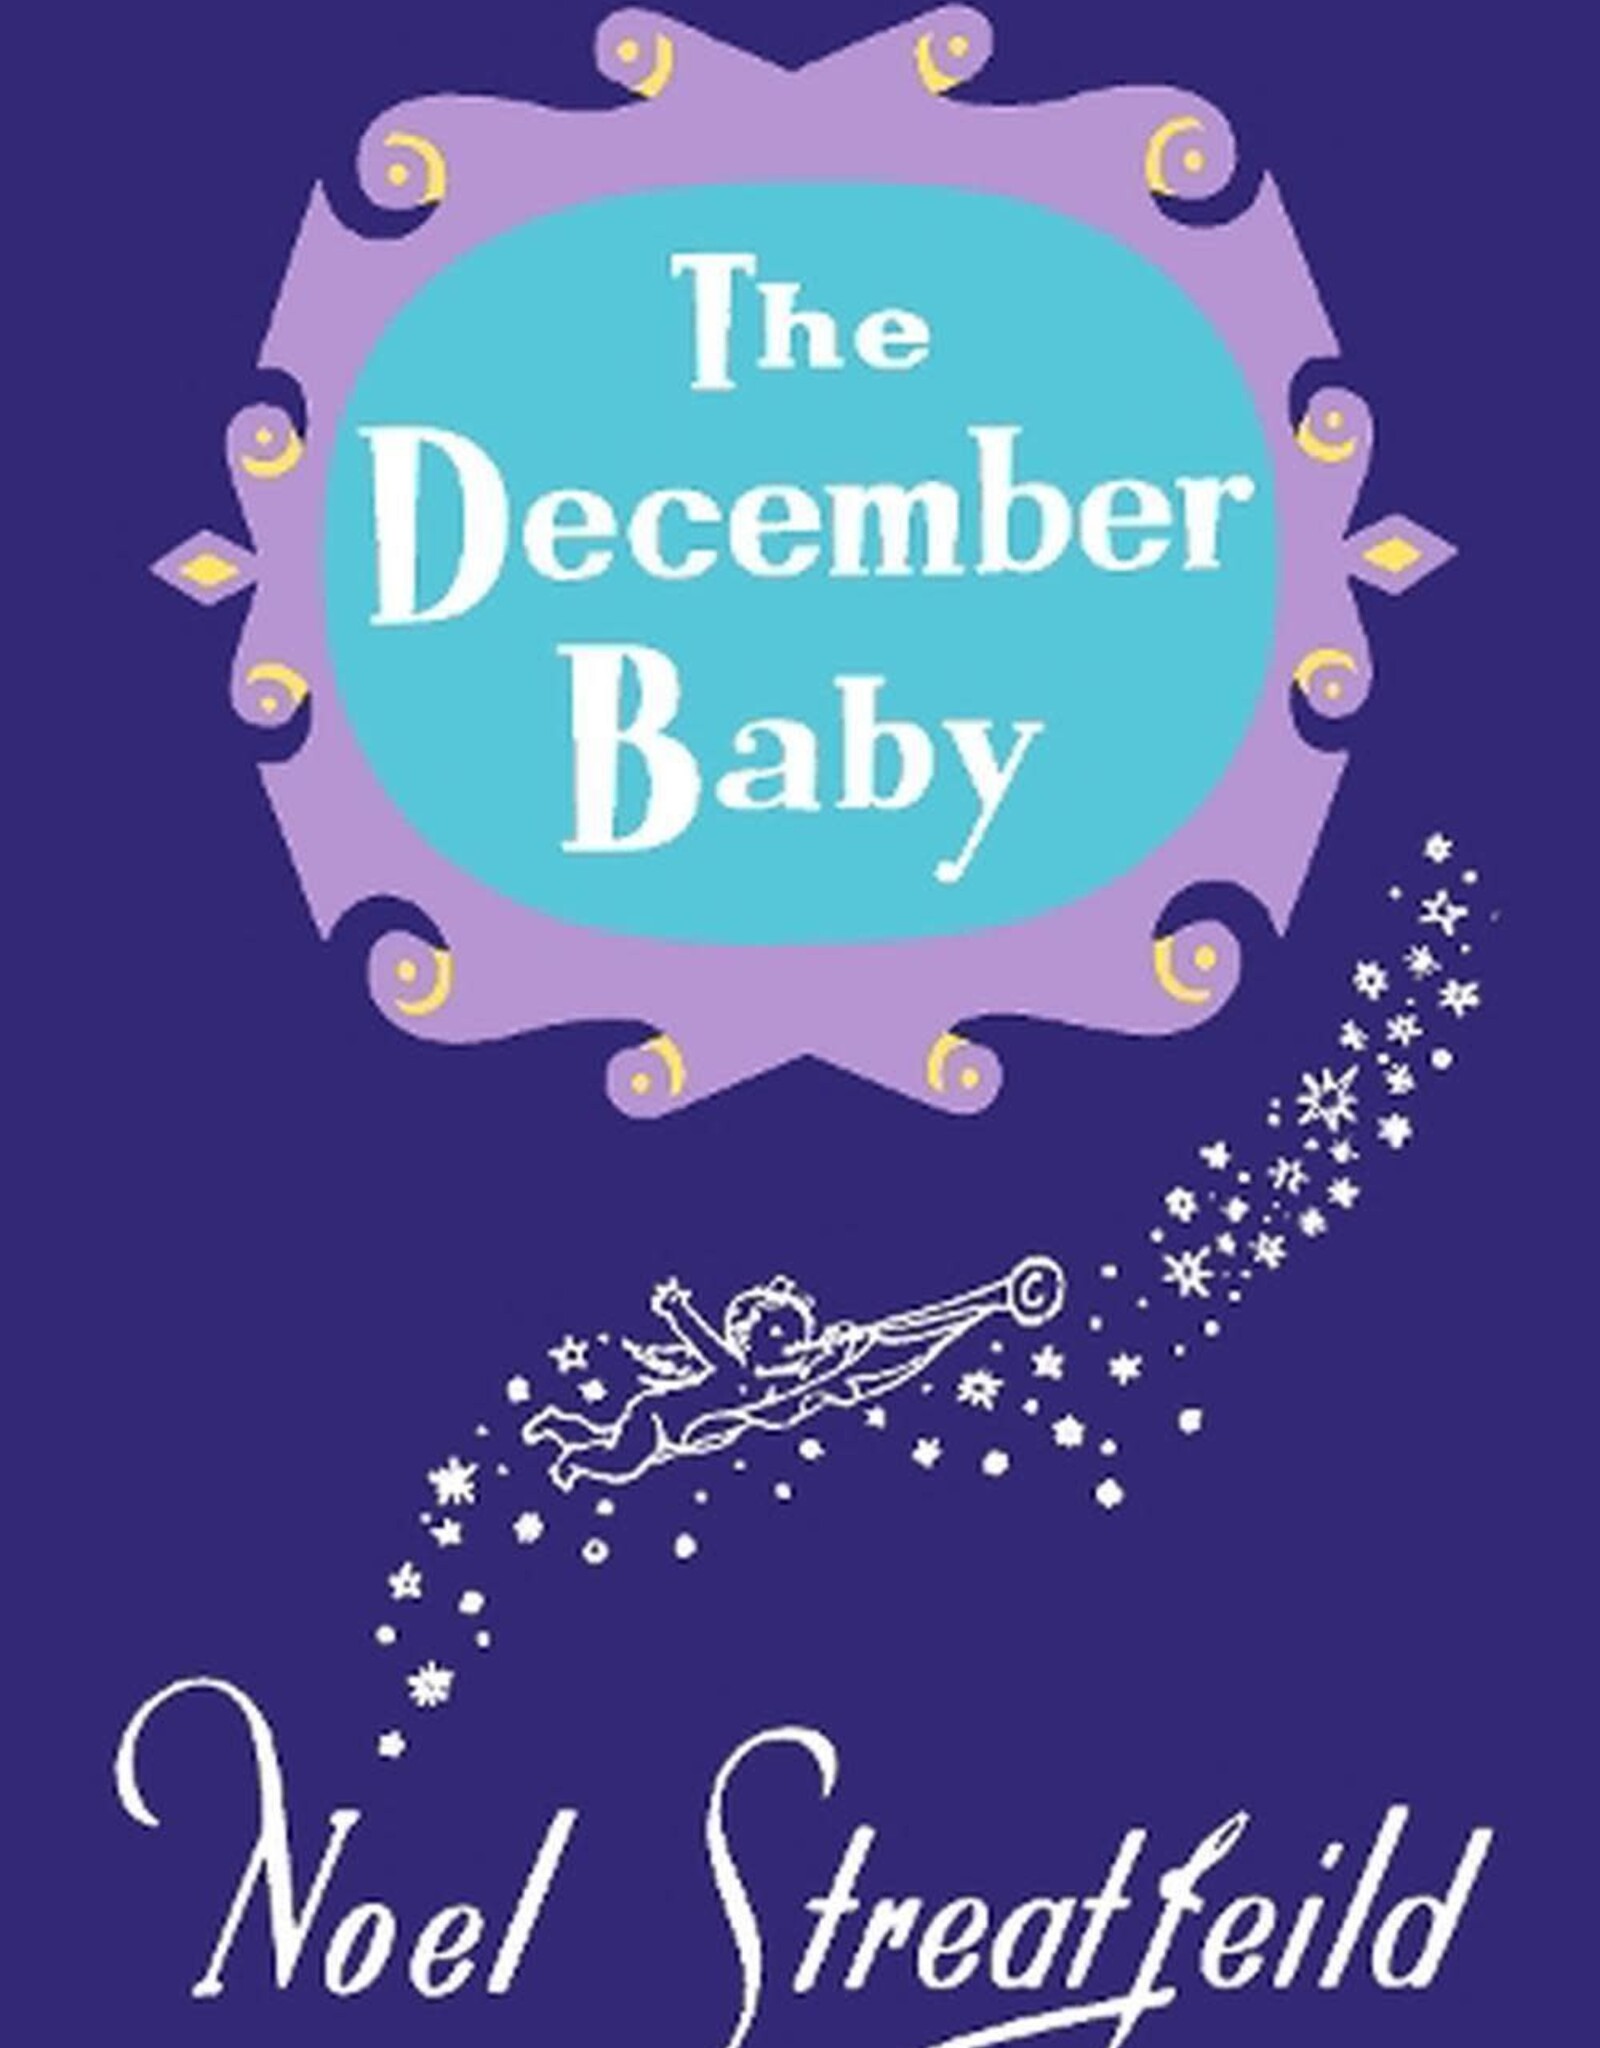 Hachette The December Baby